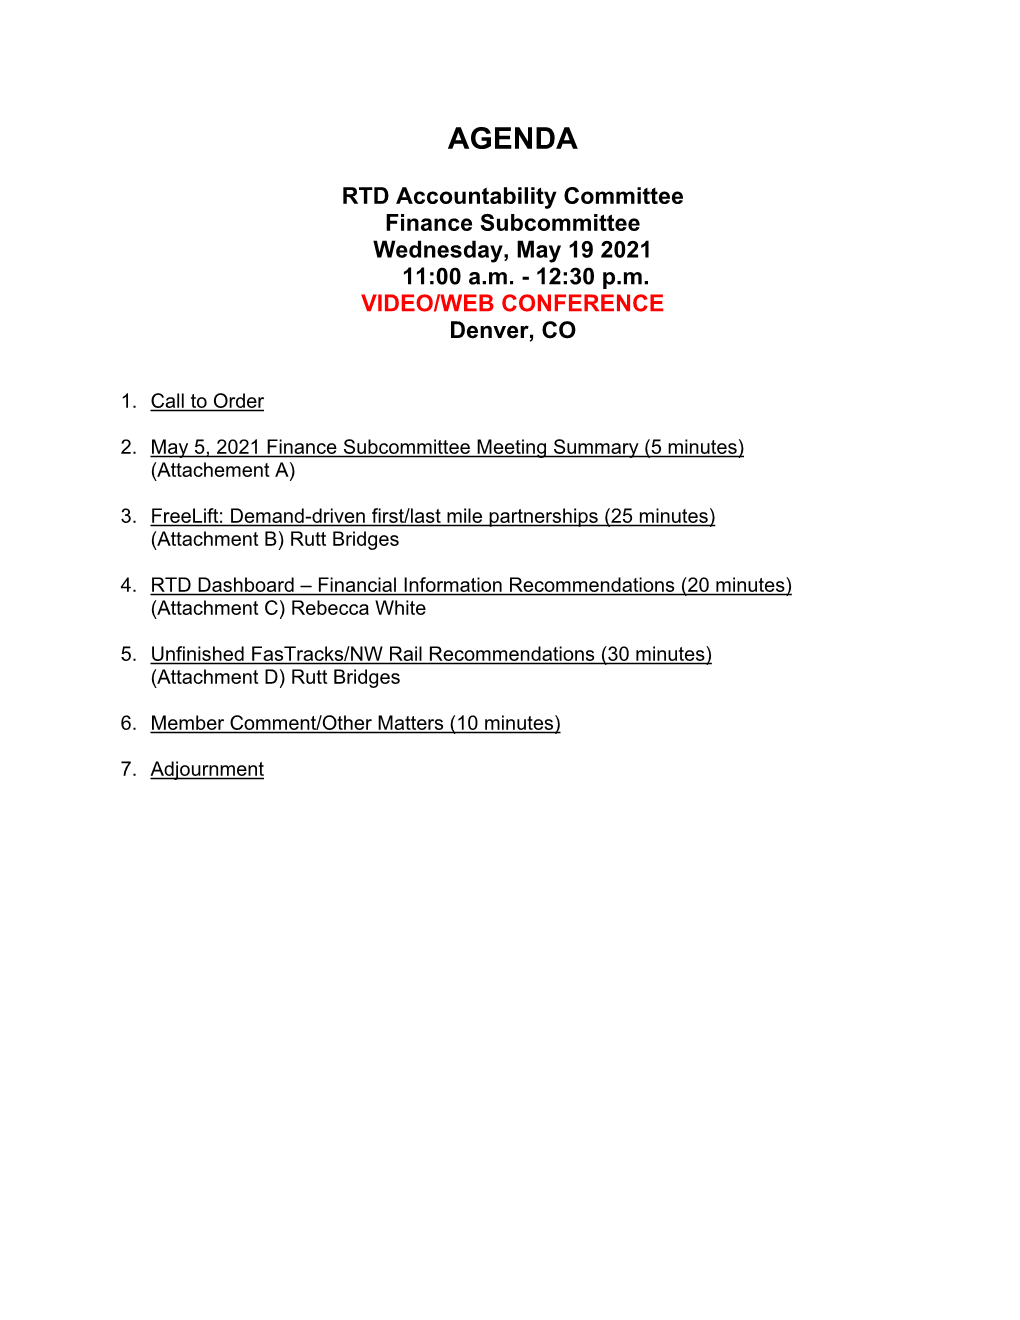 RTD Finance Sub Agenda 5-19-21.Pdf